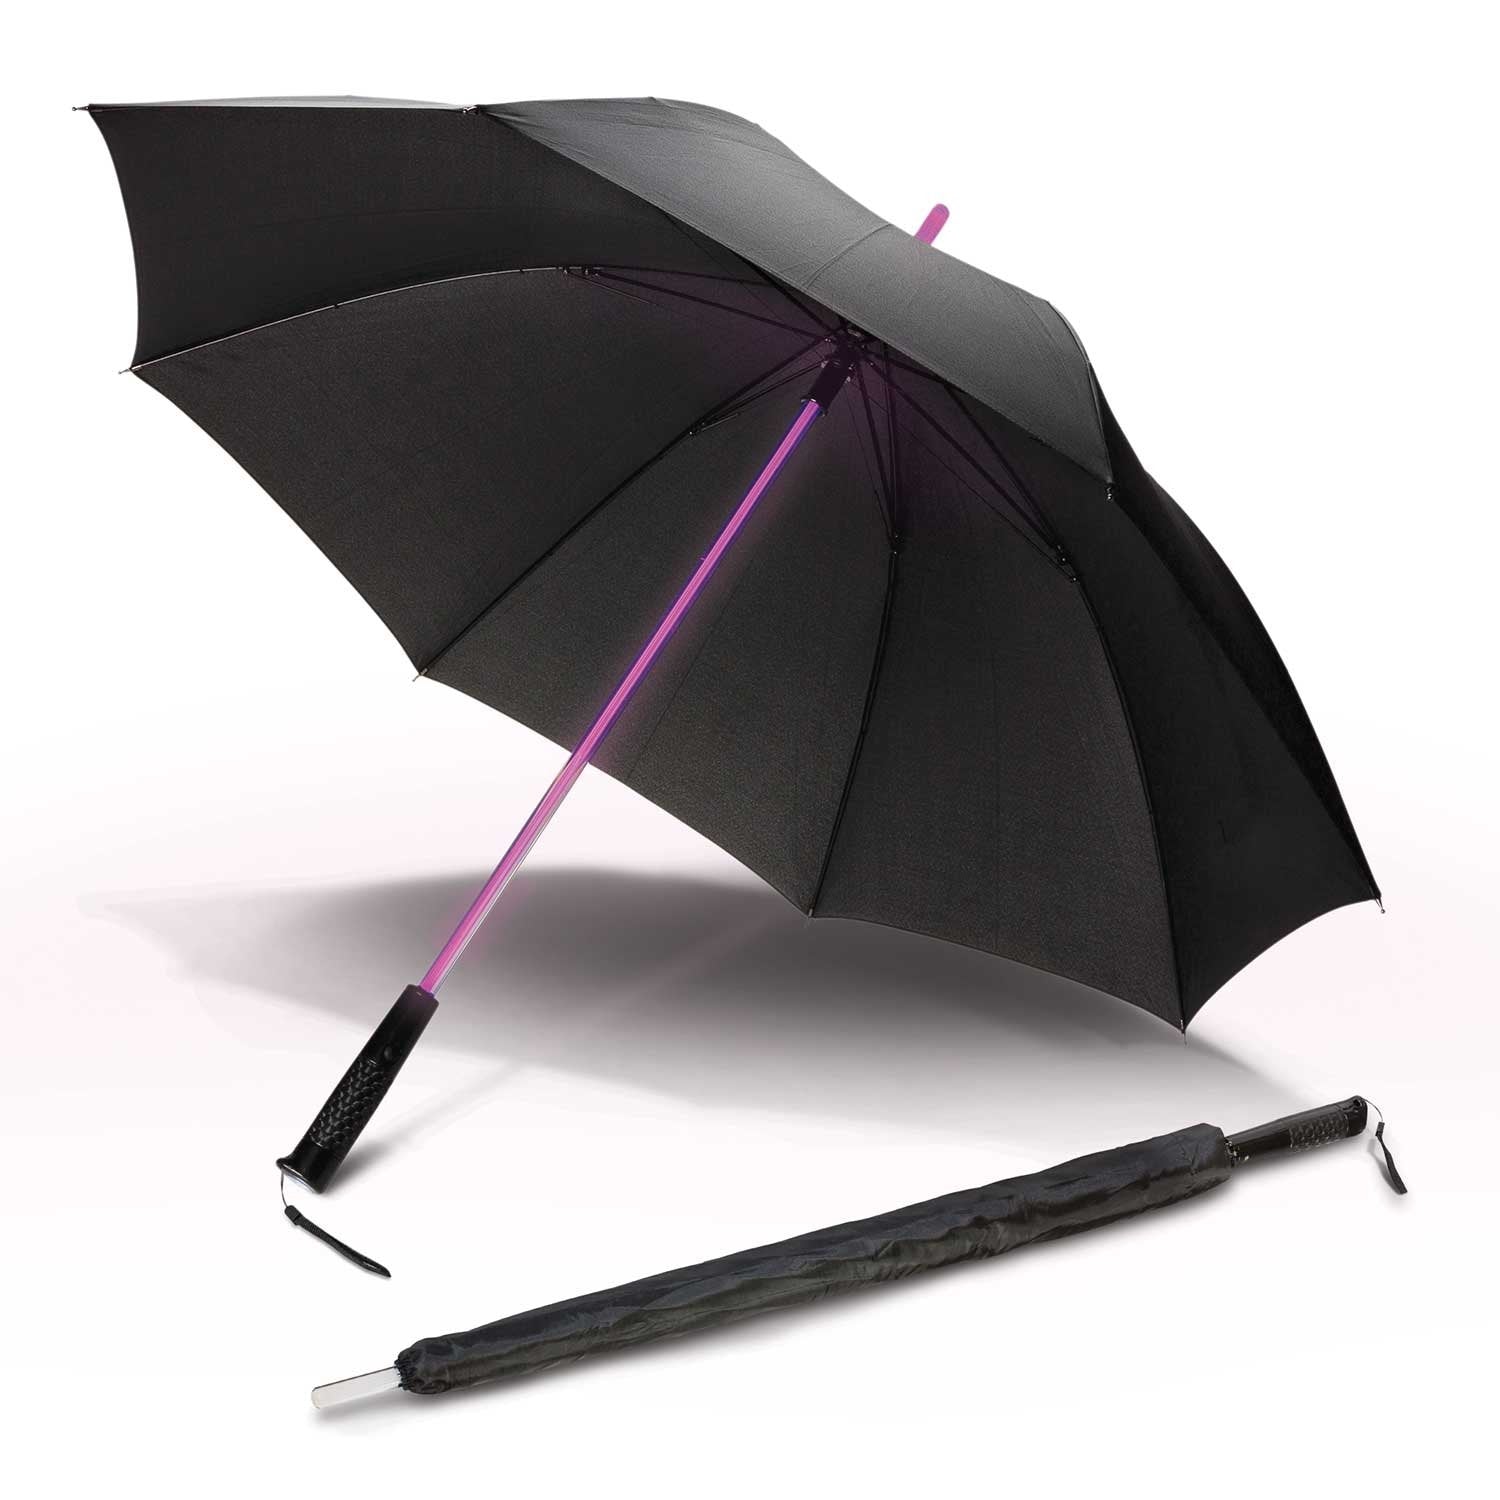 ZEUS®️-light-saber-light-up-umbrella-safety-umbrella-built-in-torch-manual-open-black-umbrella